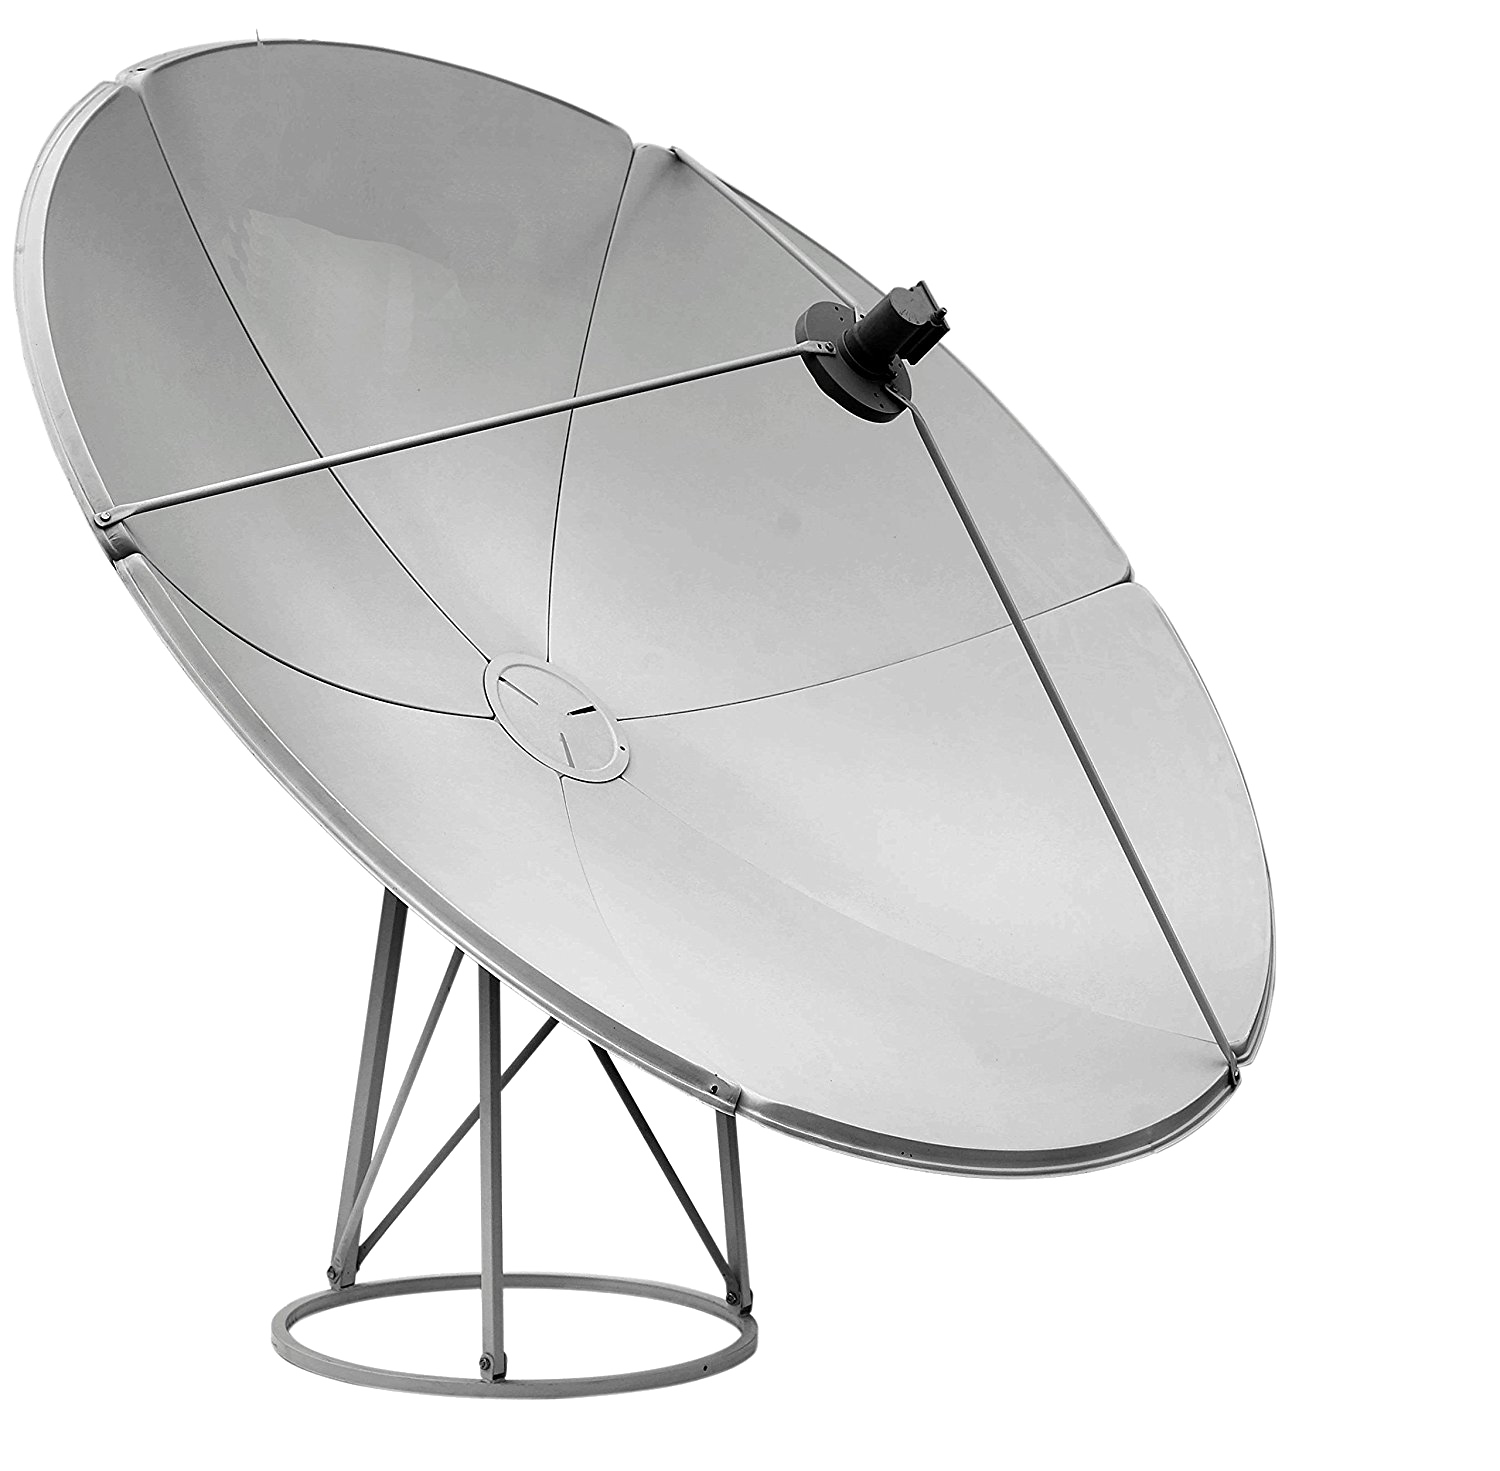 Download PNG image - Dish Antenna PNG File 